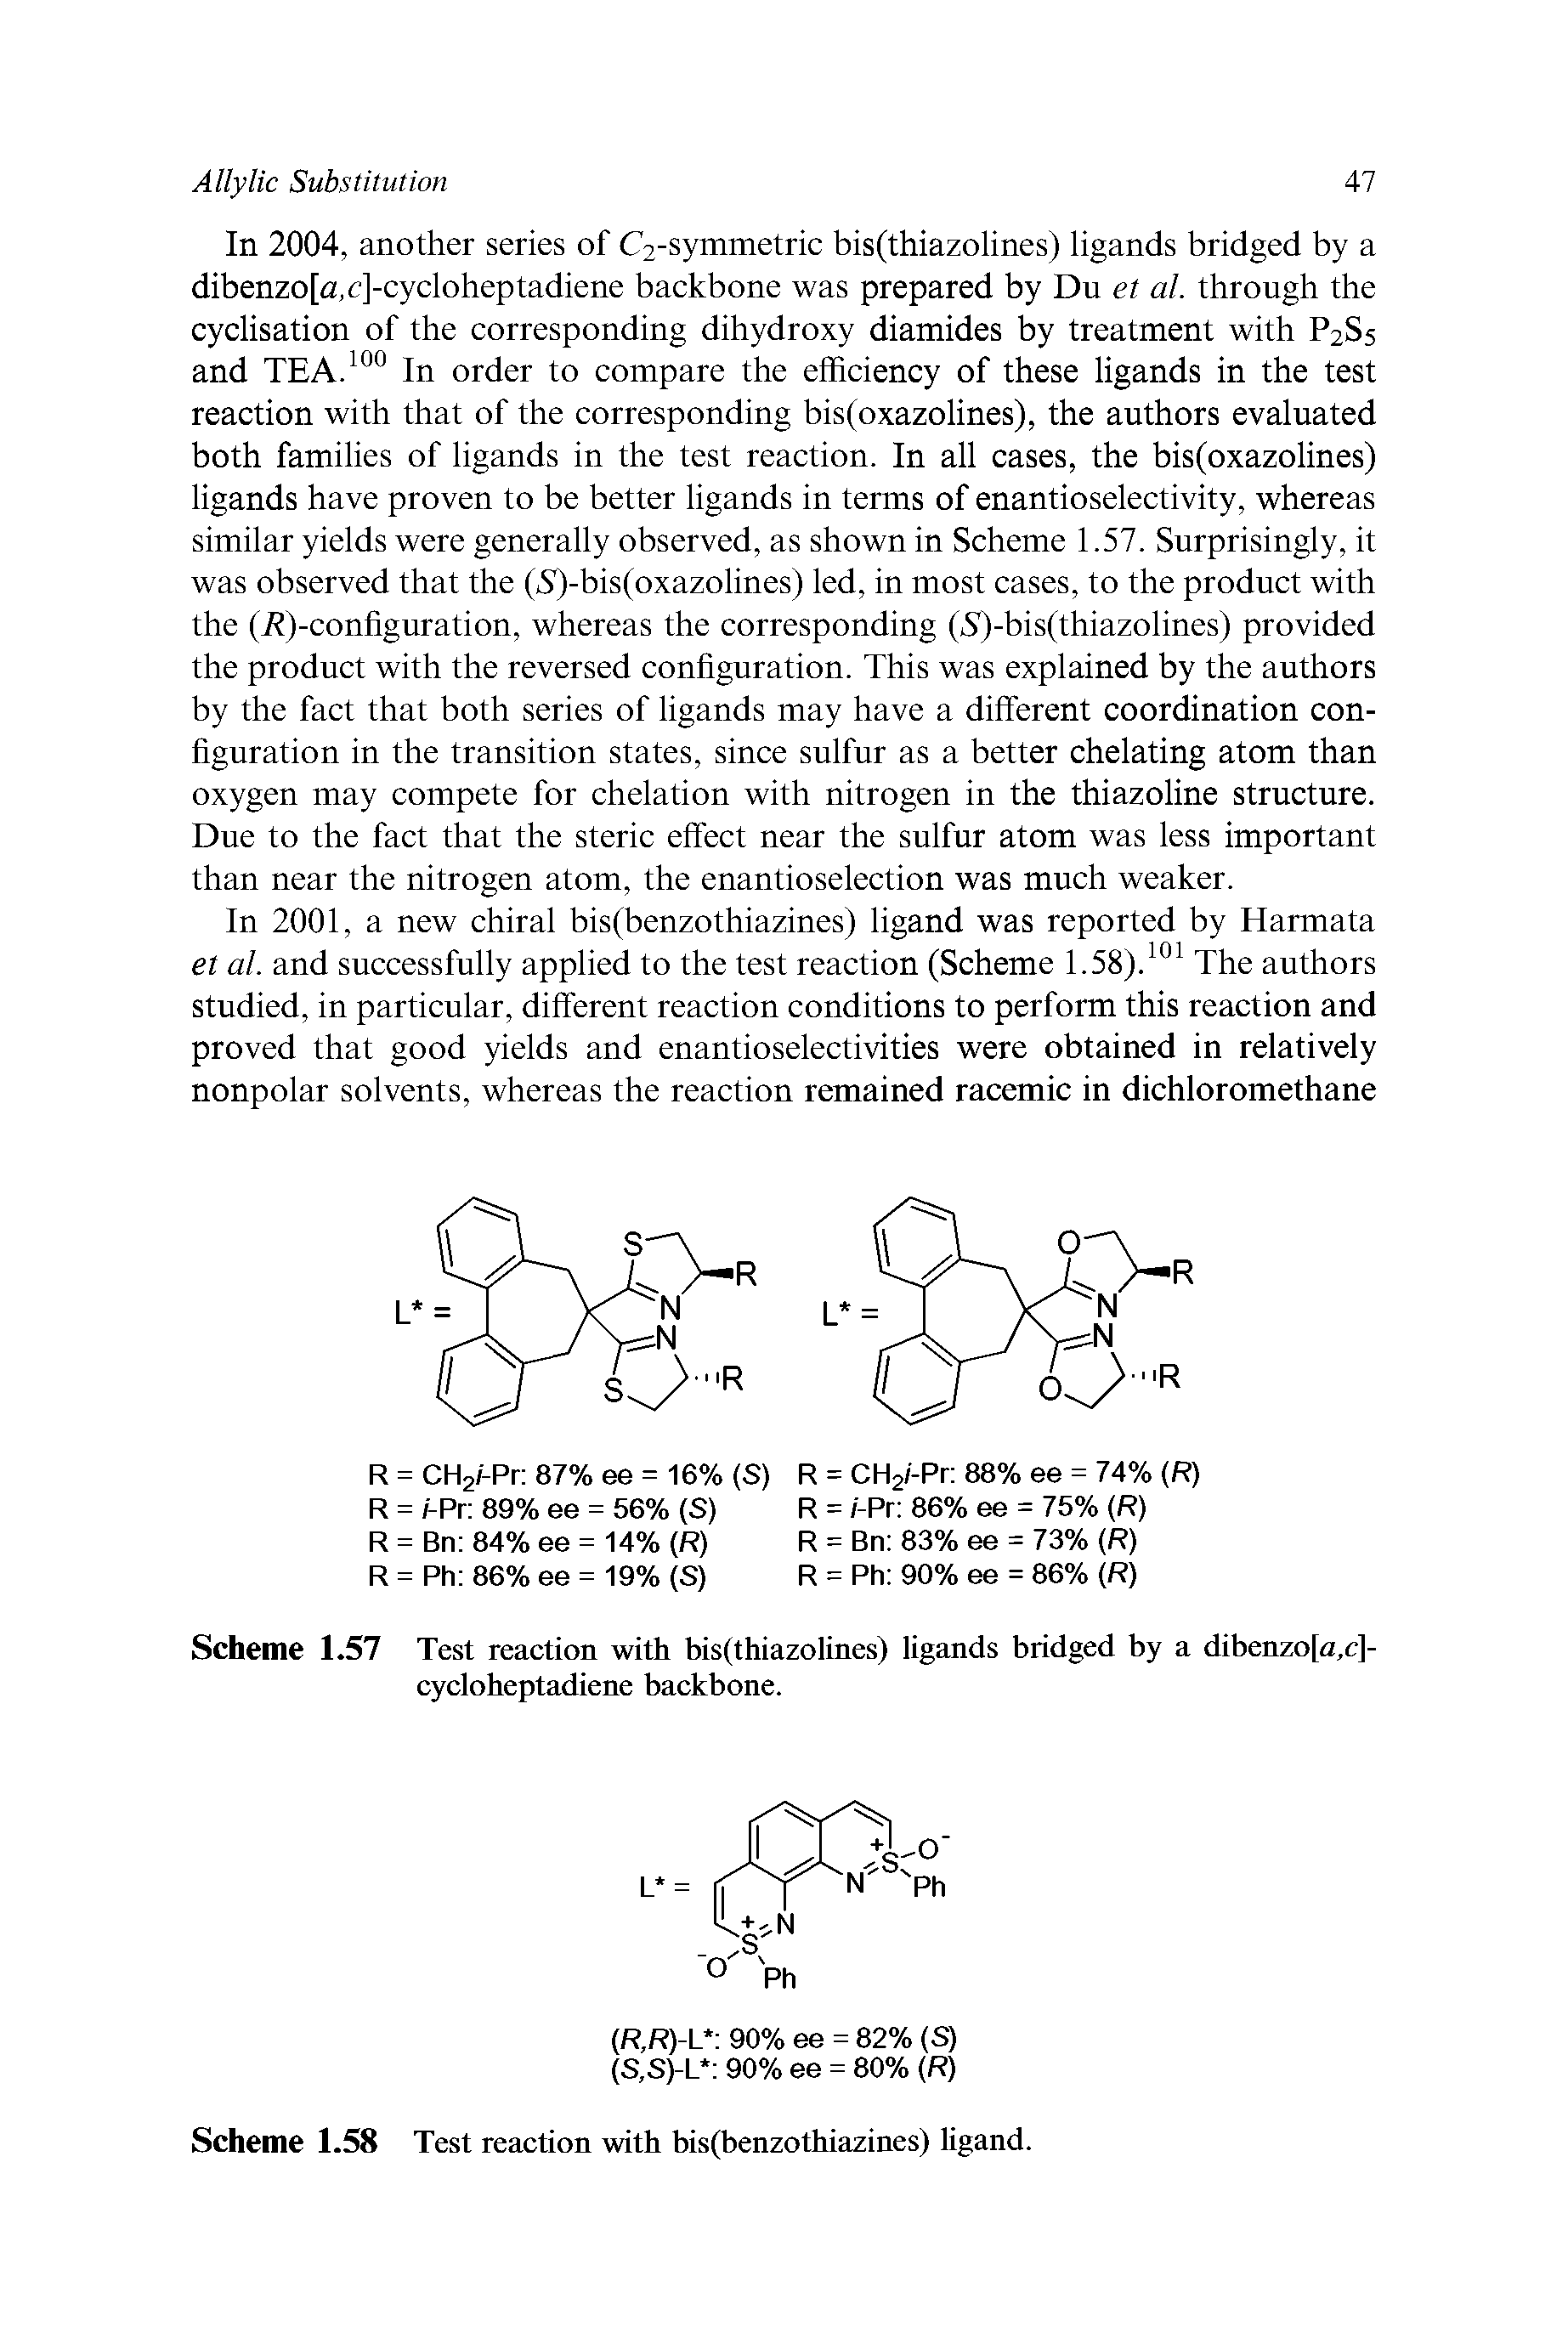 Scheme 1.57 Test reaction with bis(thiazolines) ligands bridged by a dibenzo[a,c]-cycloheptadiene backbone.